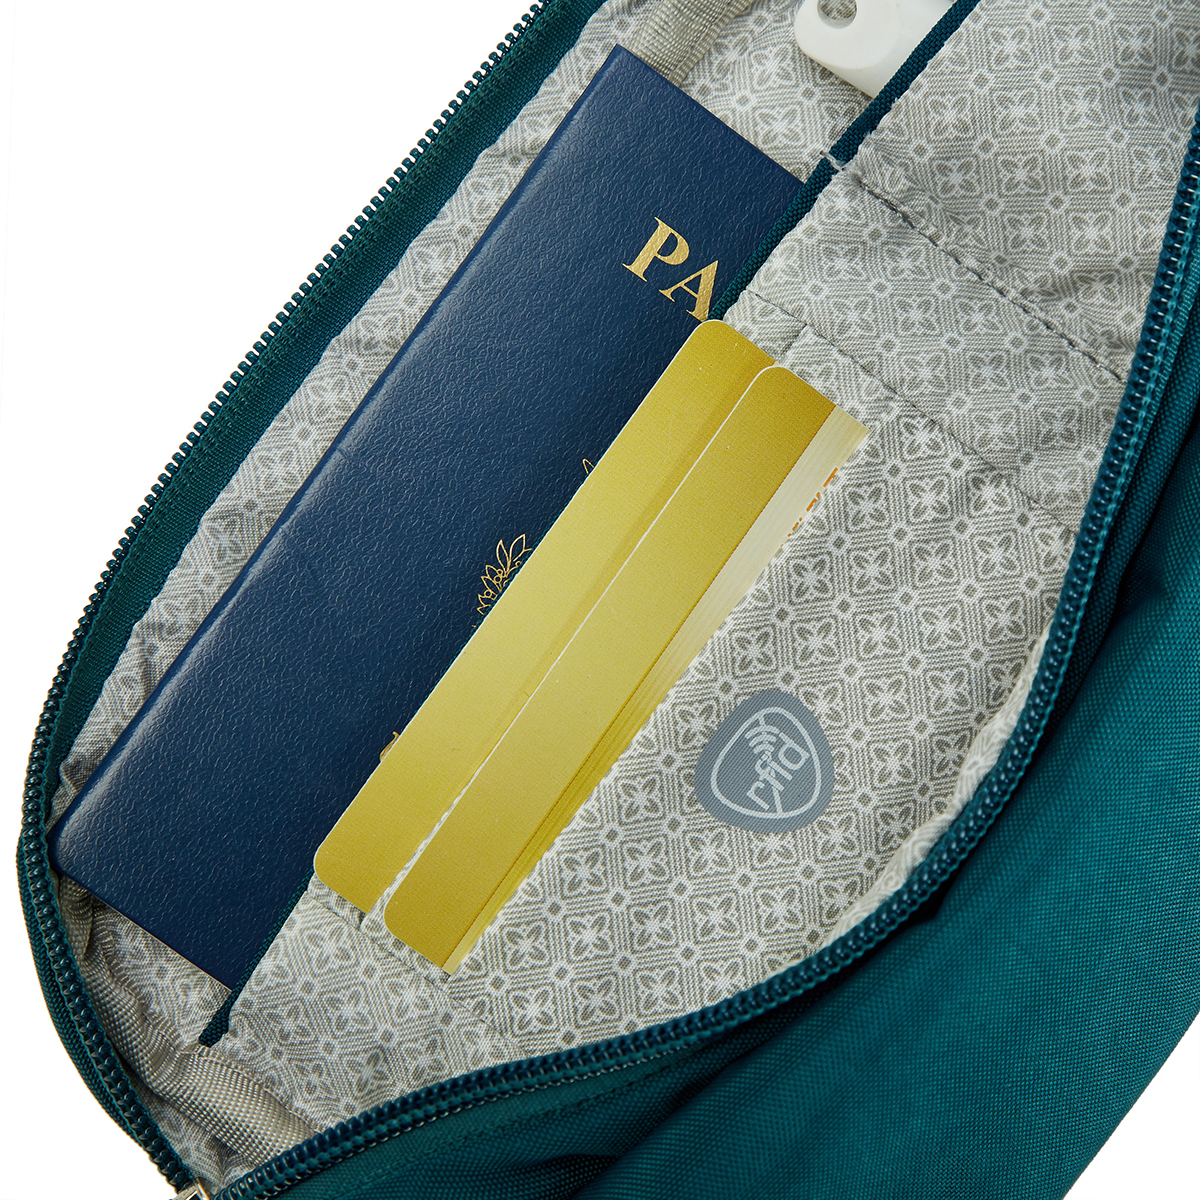 Travelon Essentials Anti-Theft Slim Belt Bag